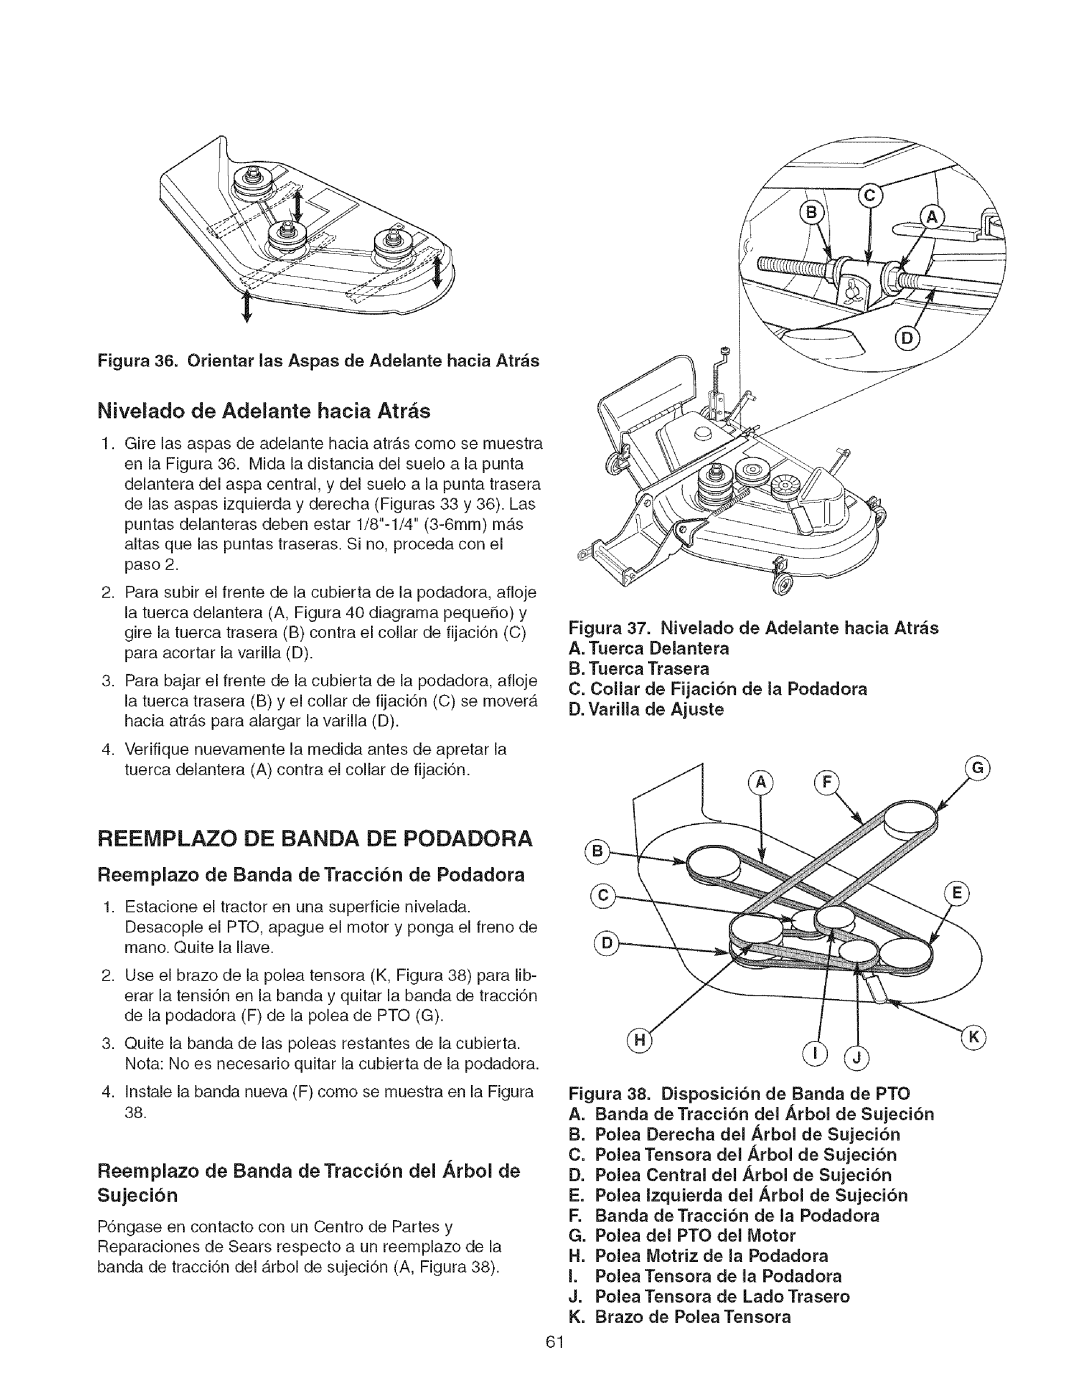 Craftsman 107.2777 manual Reemplazo De Banda De Podadora, Nivelado de Adelante hacia Atr_s, I.PoleaTensora de la Podadora 